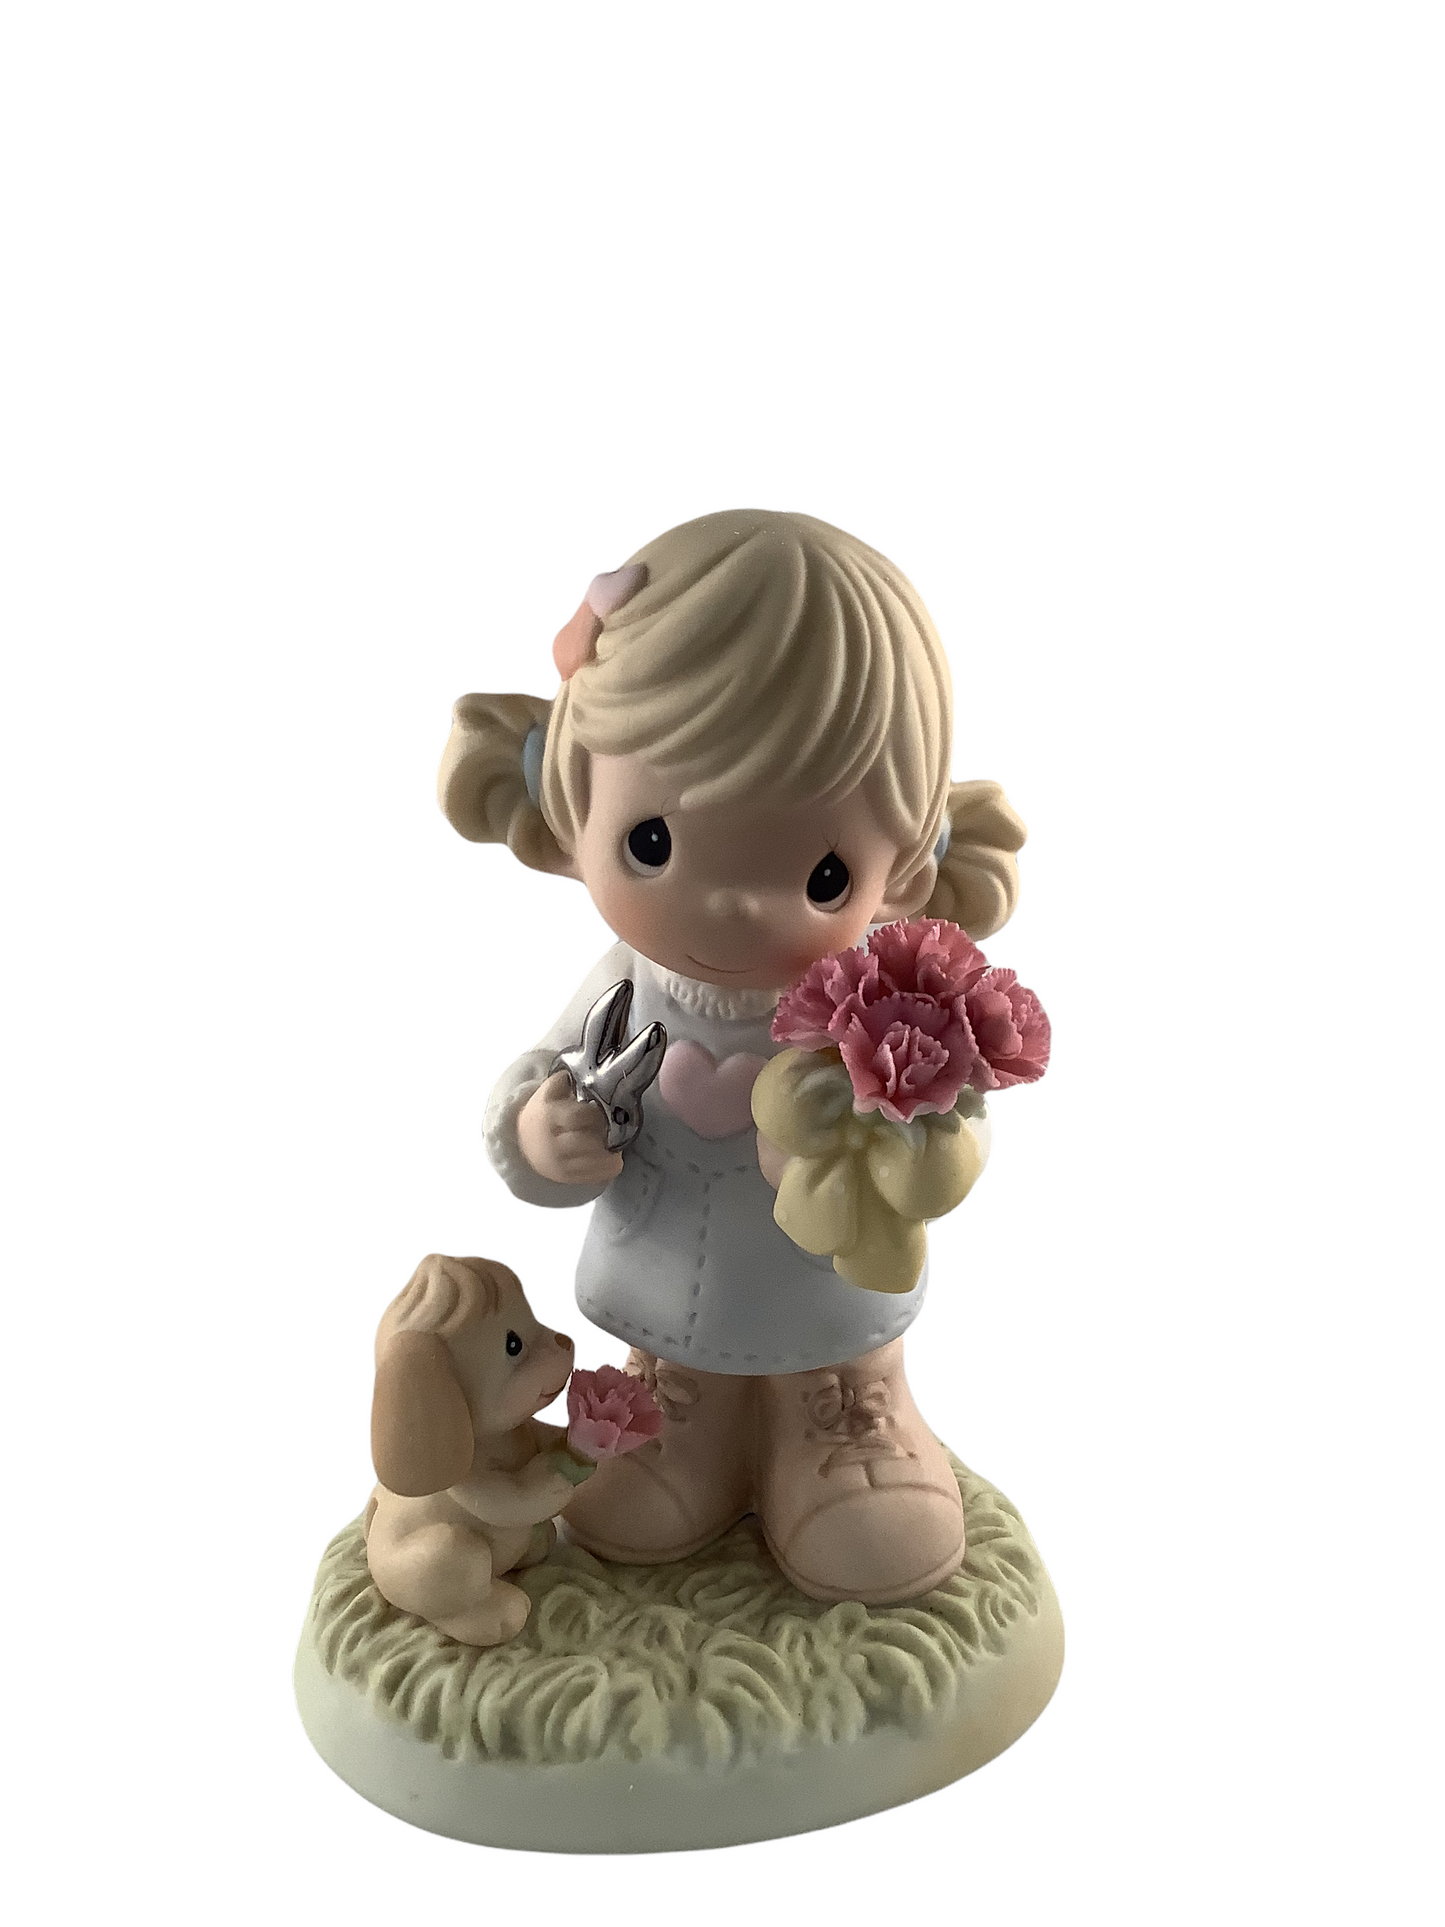 February - Carnation, "Bold and Brave" - Precious Moment Figurine